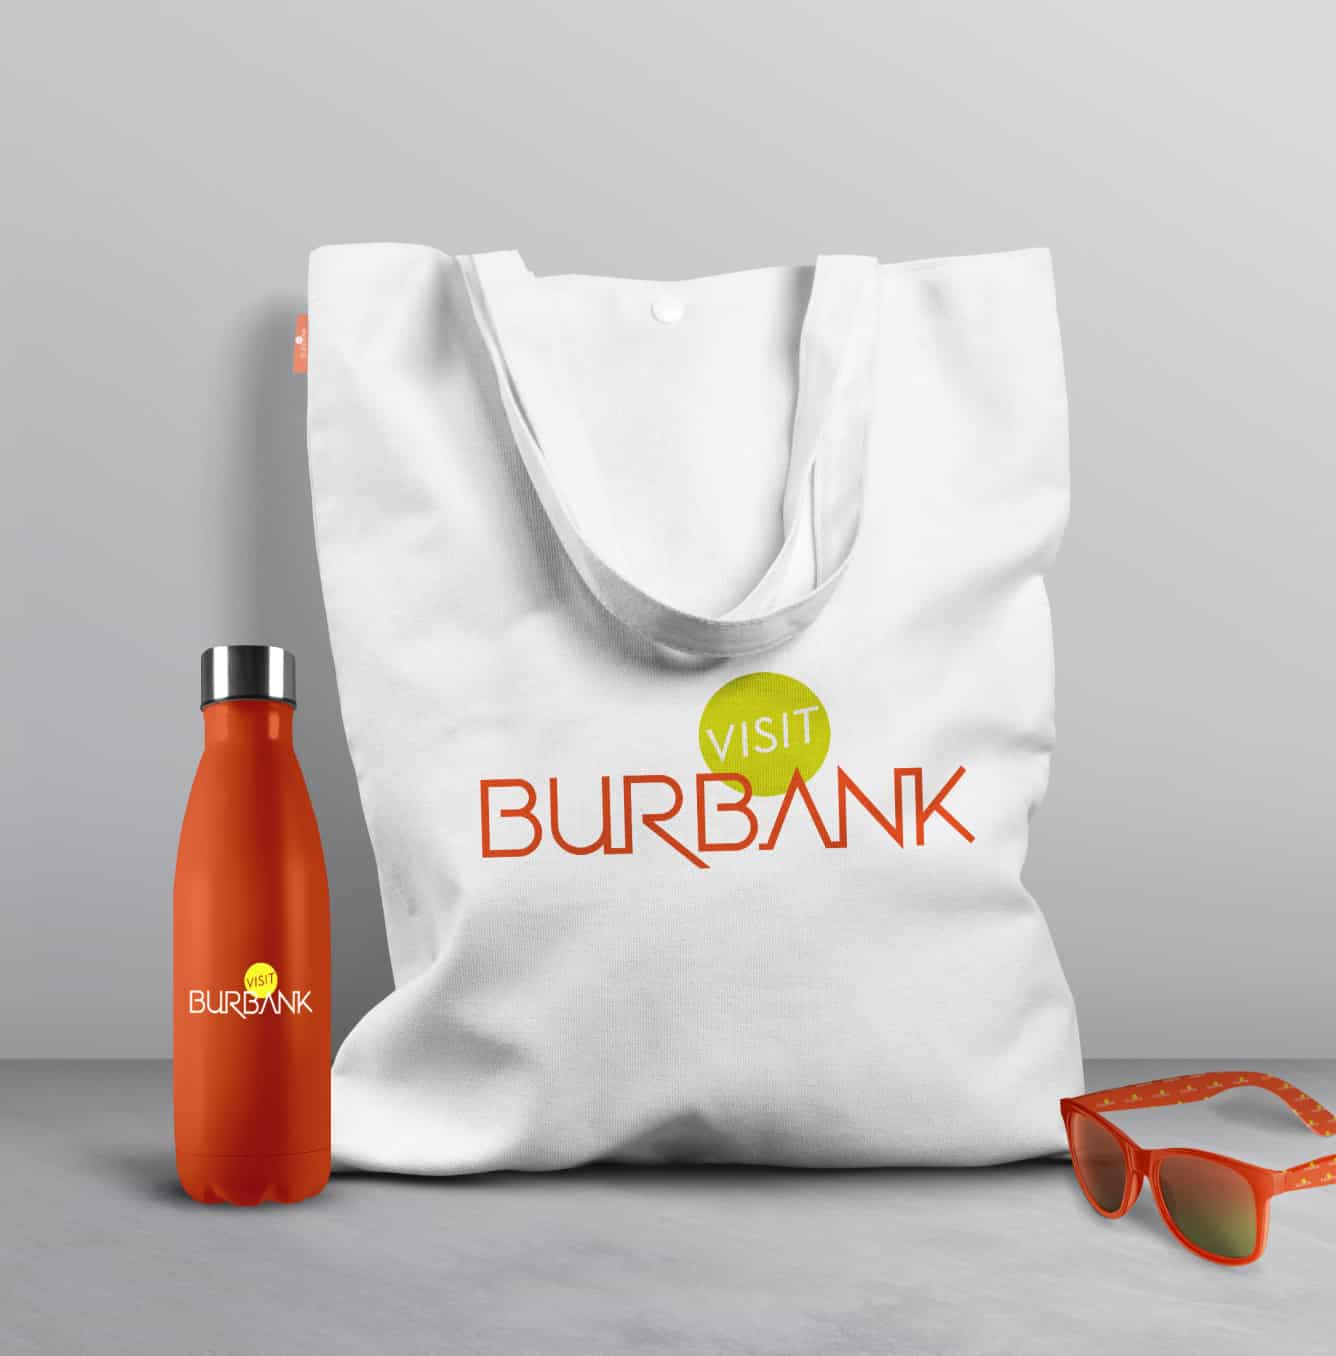 Visit Burbank tote bag and water bottle